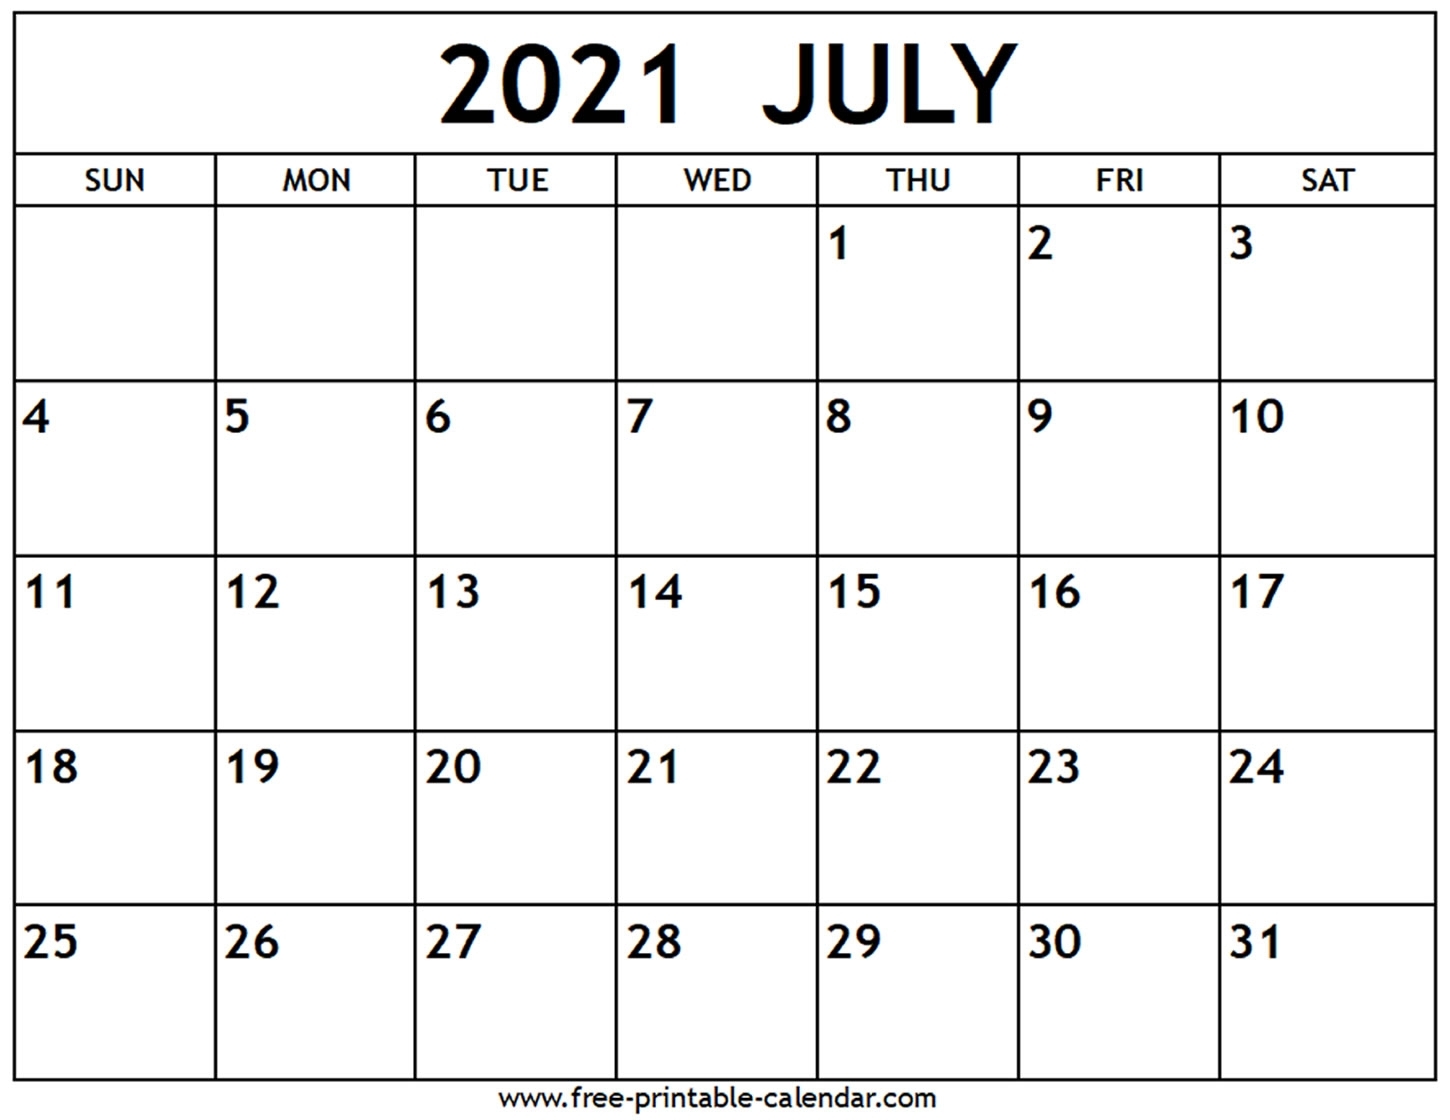 July 2021 Calendar - Free-Printable-Calendar